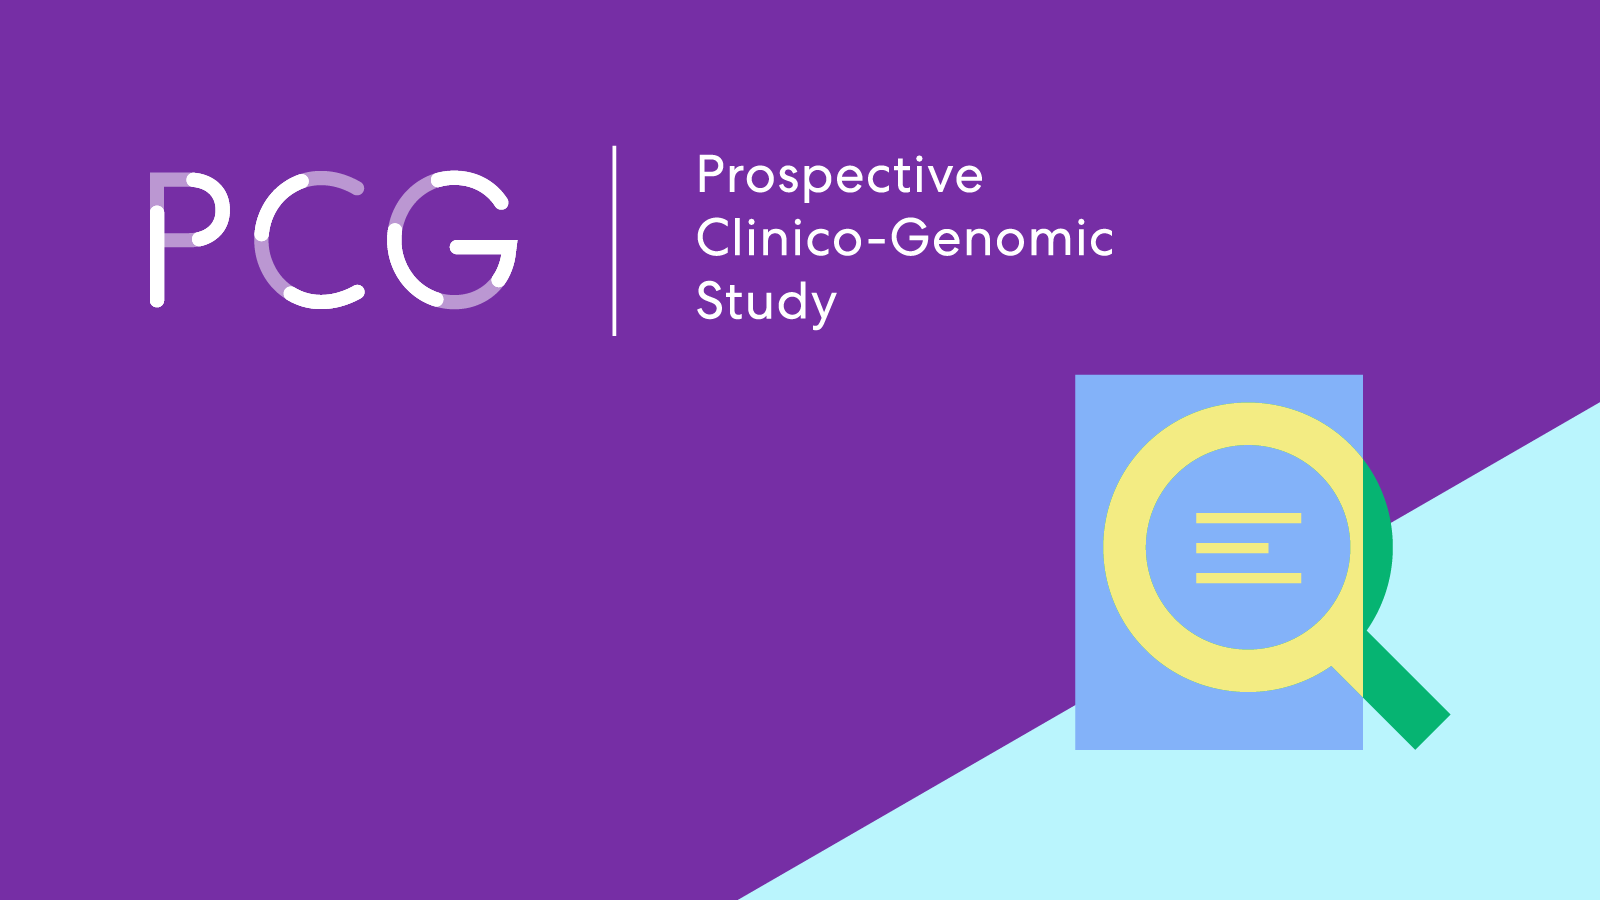 Prospective Clinico-Genomic Study